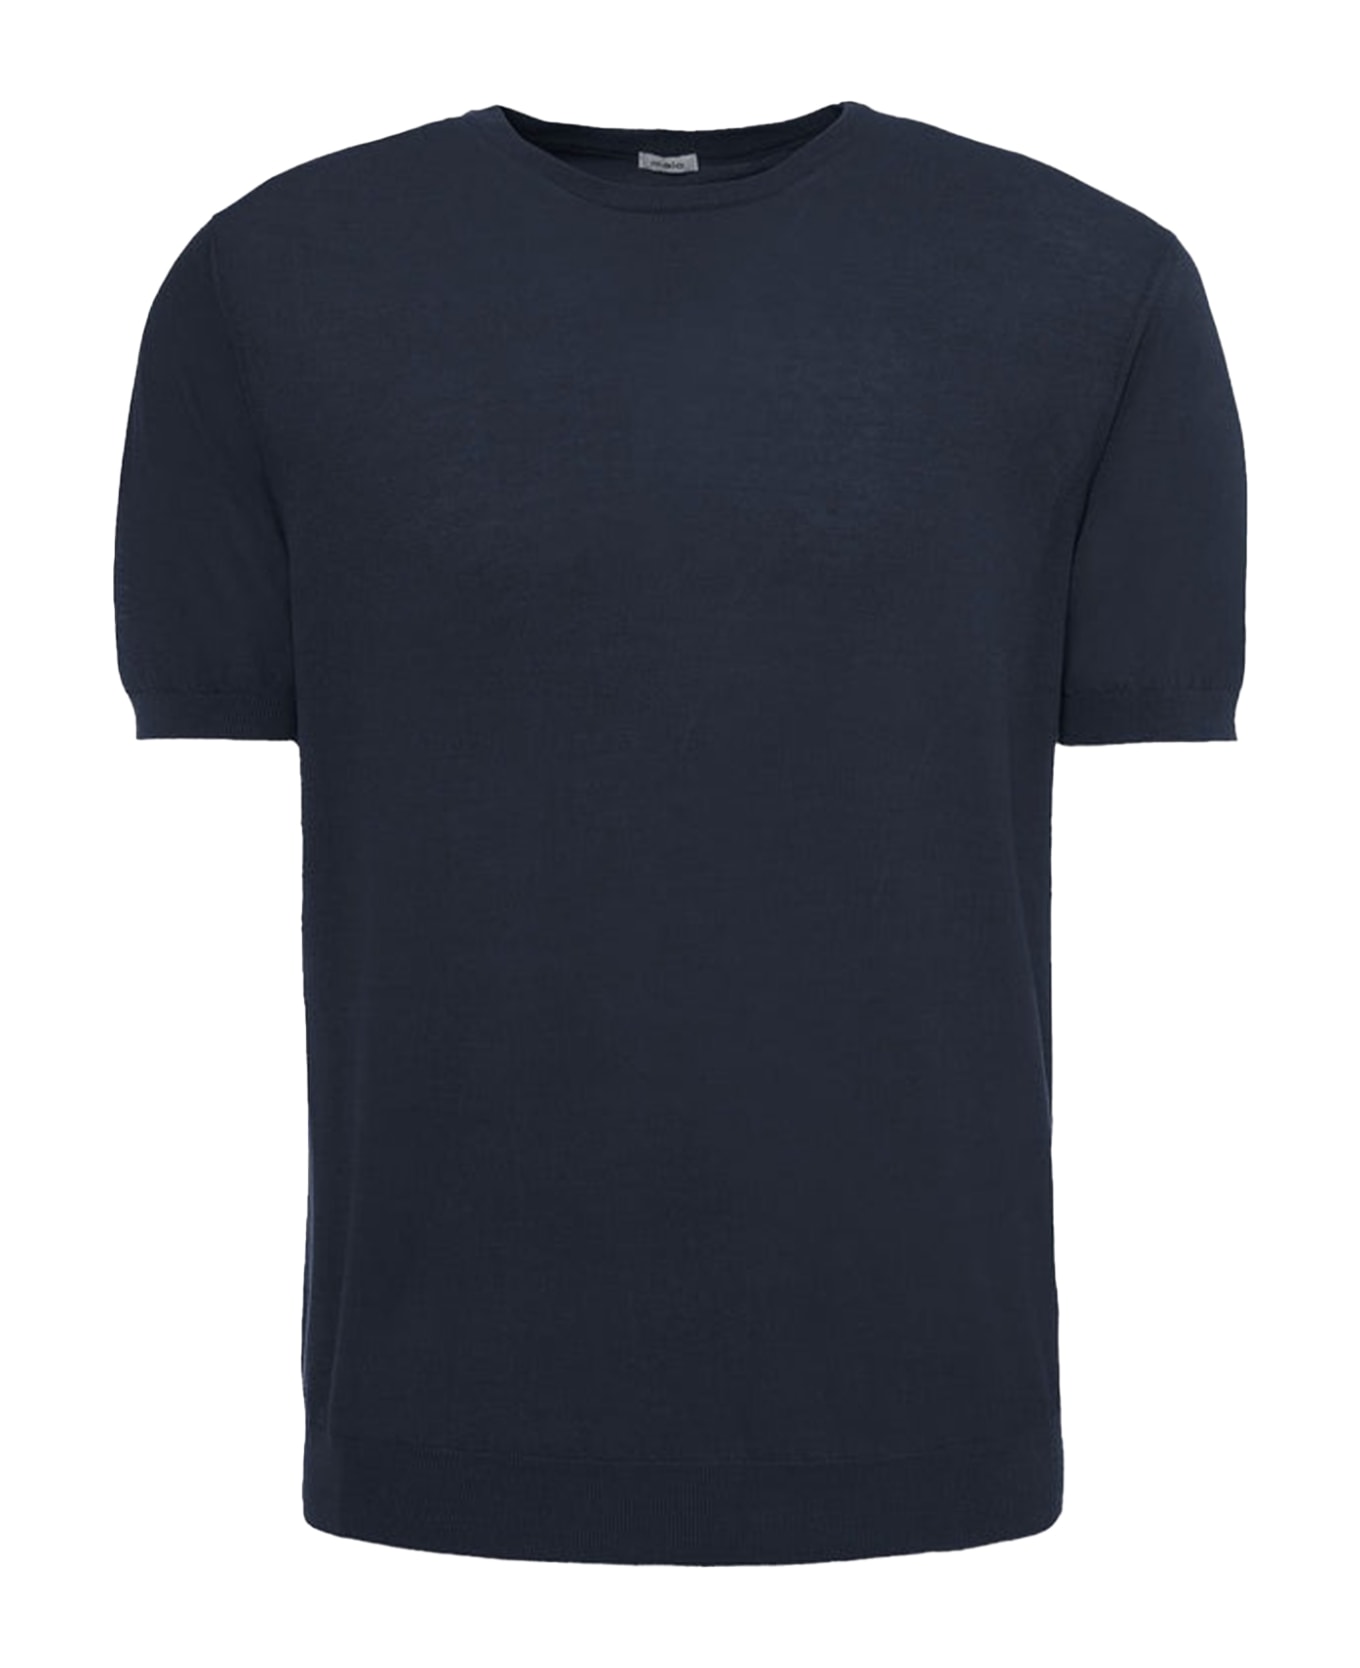 Malo Navy Blue Cotton T-shirt - MARINO シャツ